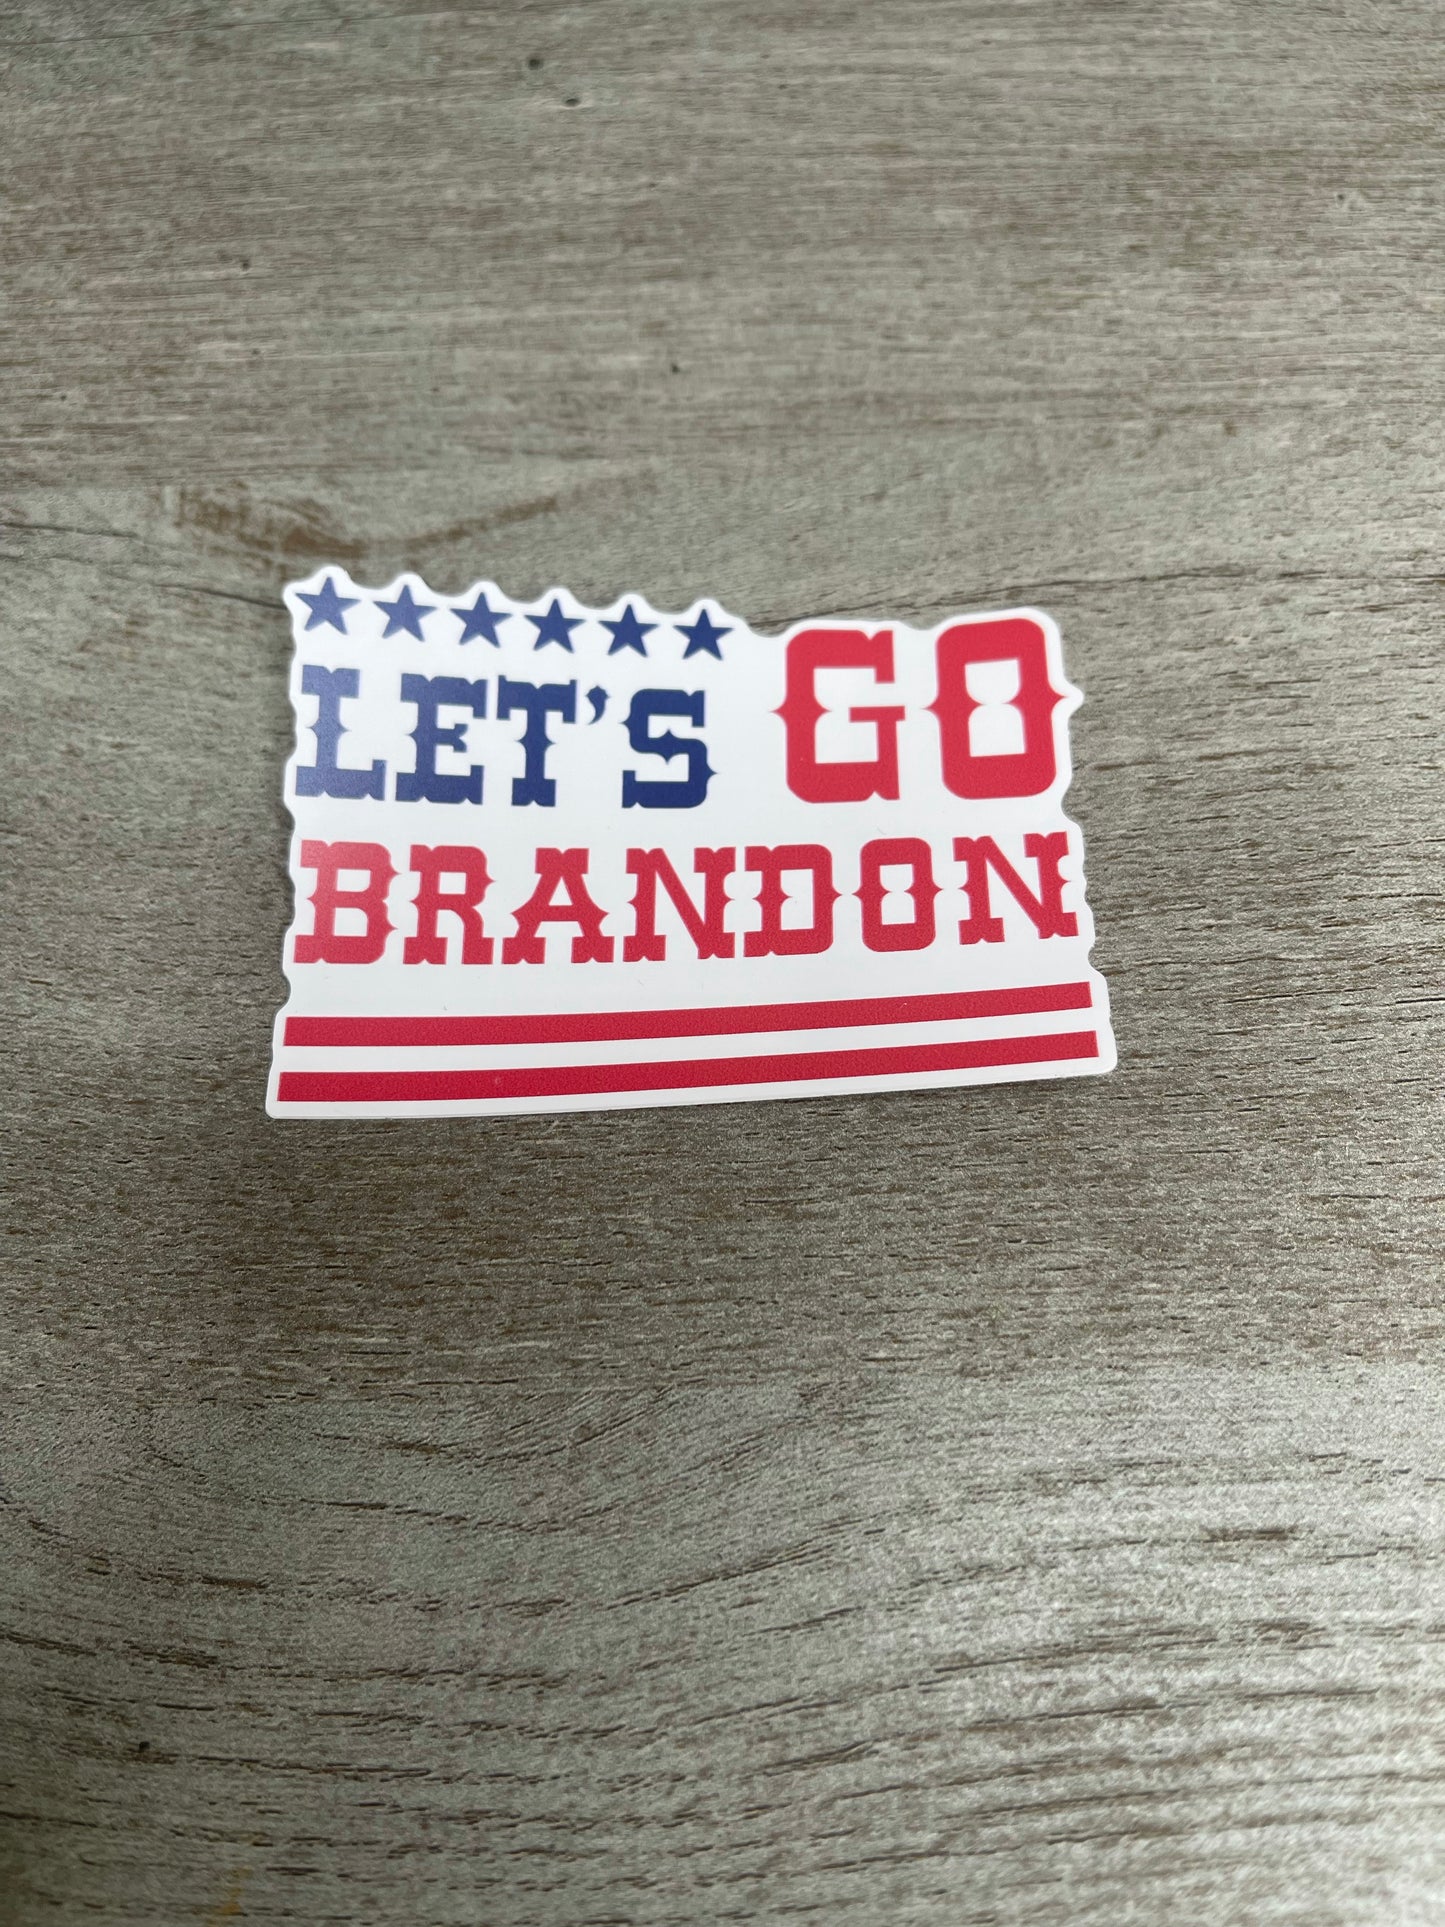 Let's Go Brandon Sticker #4